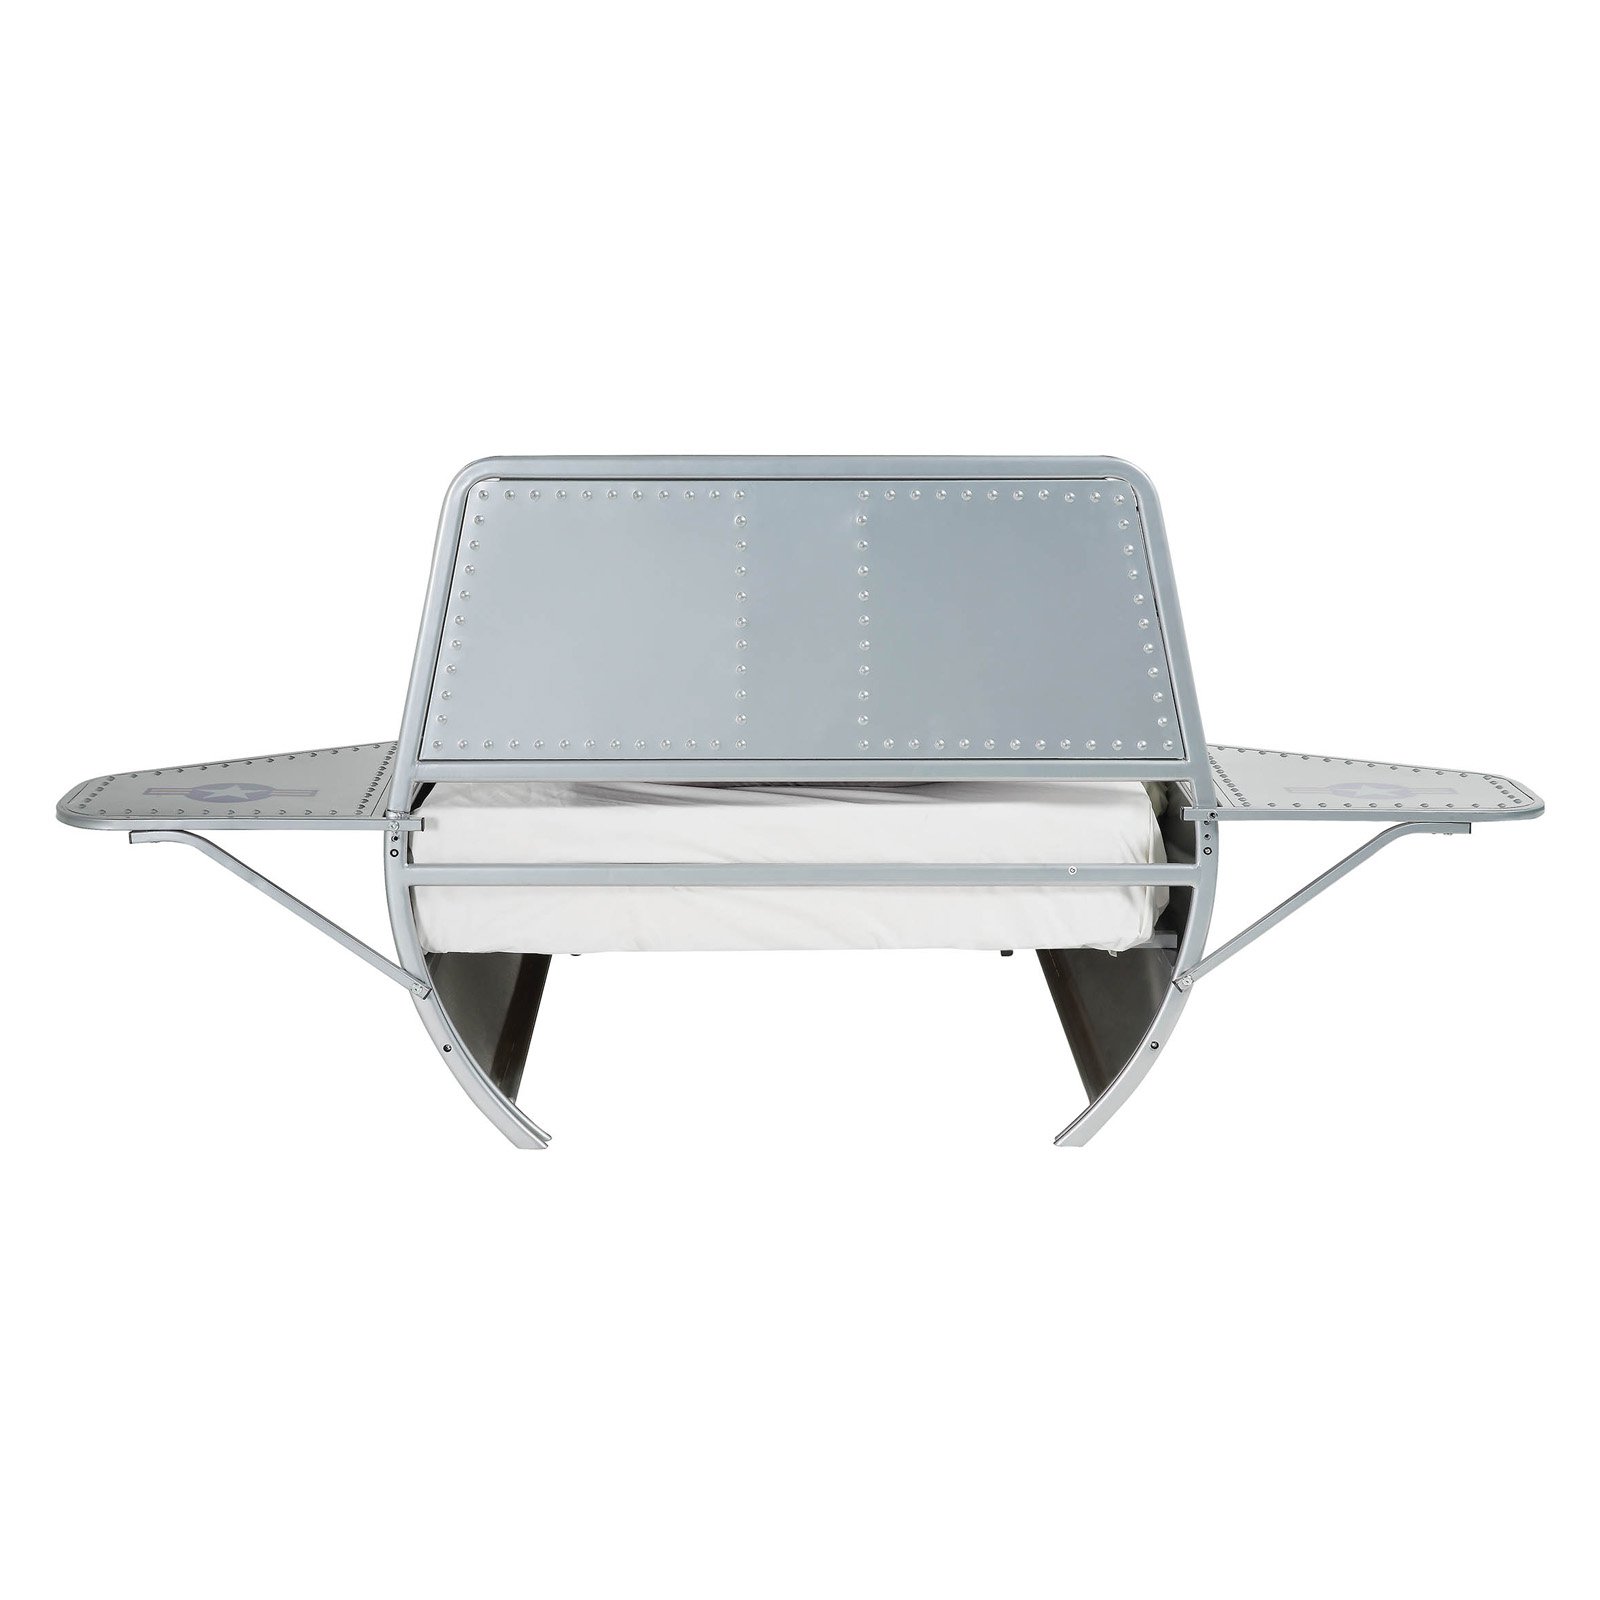 ACME Aeronautic Storage Metal Bed in Silver Finish, Multiple Sizes - image 3 of 11